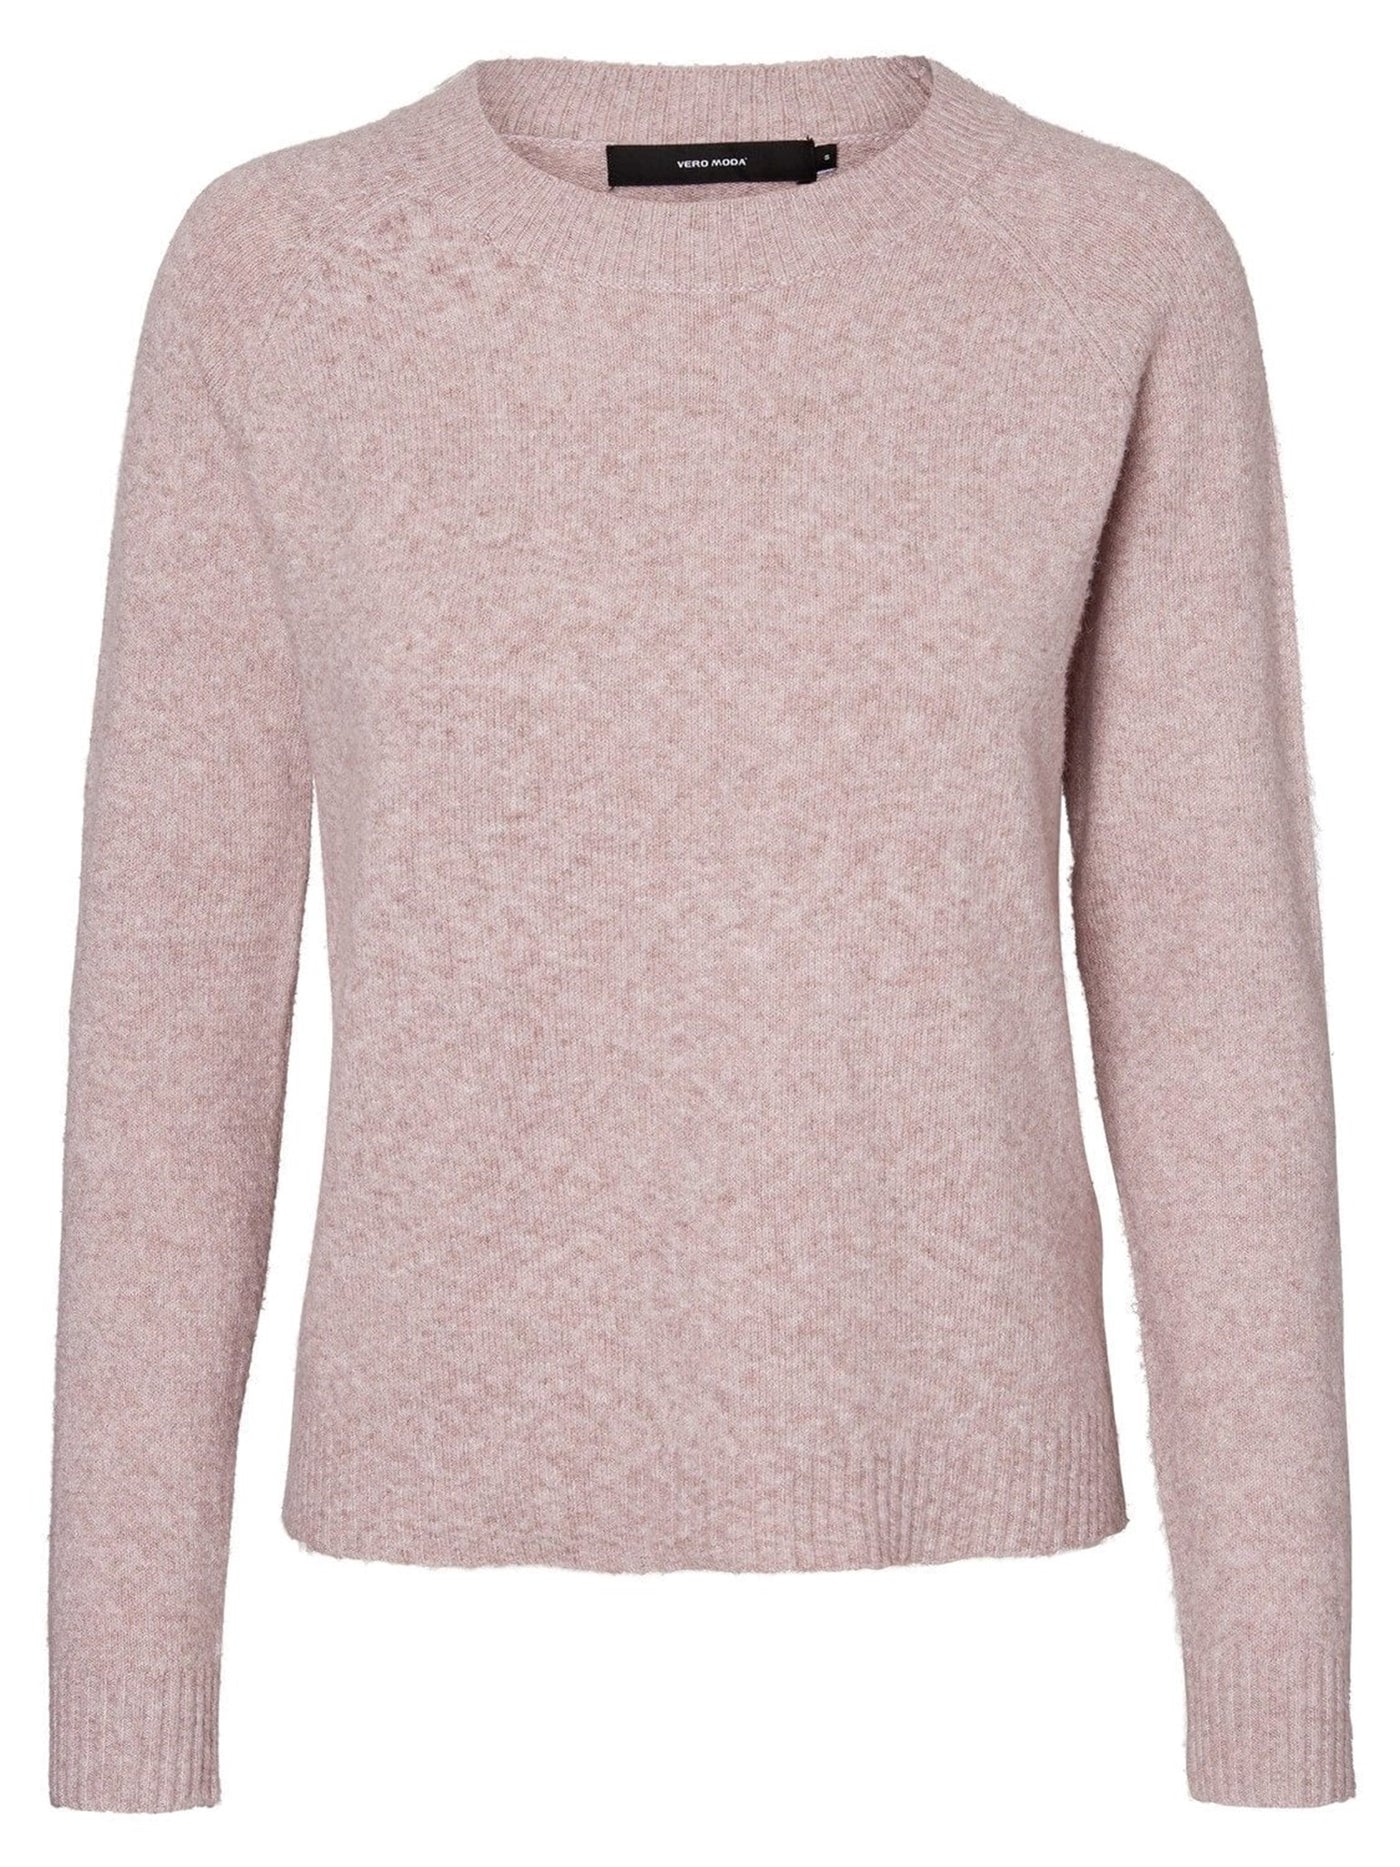 Soft Doffy knit - Wood rose melange - Vero Moda - Pink 4